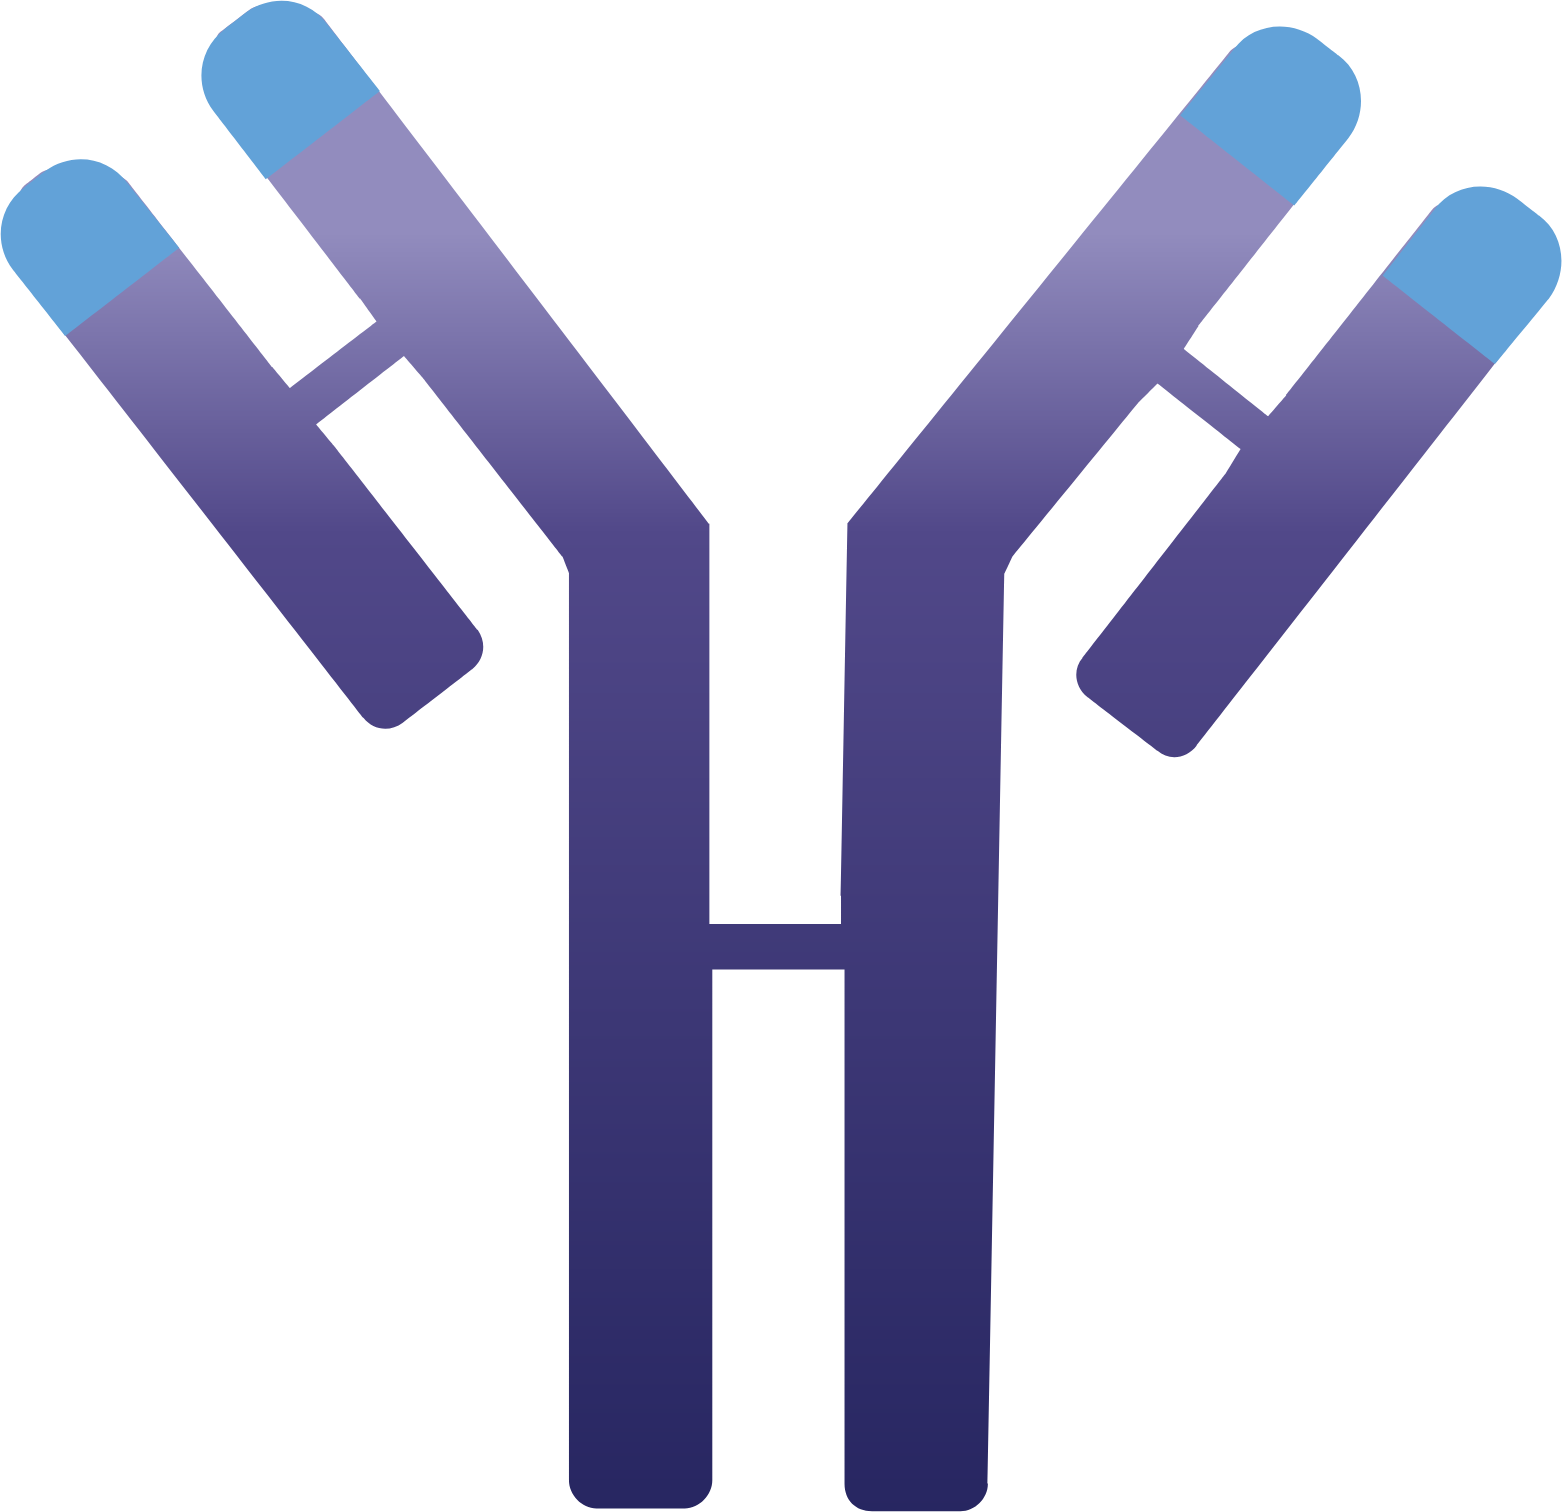 Immunovant logo (PNG transparent)